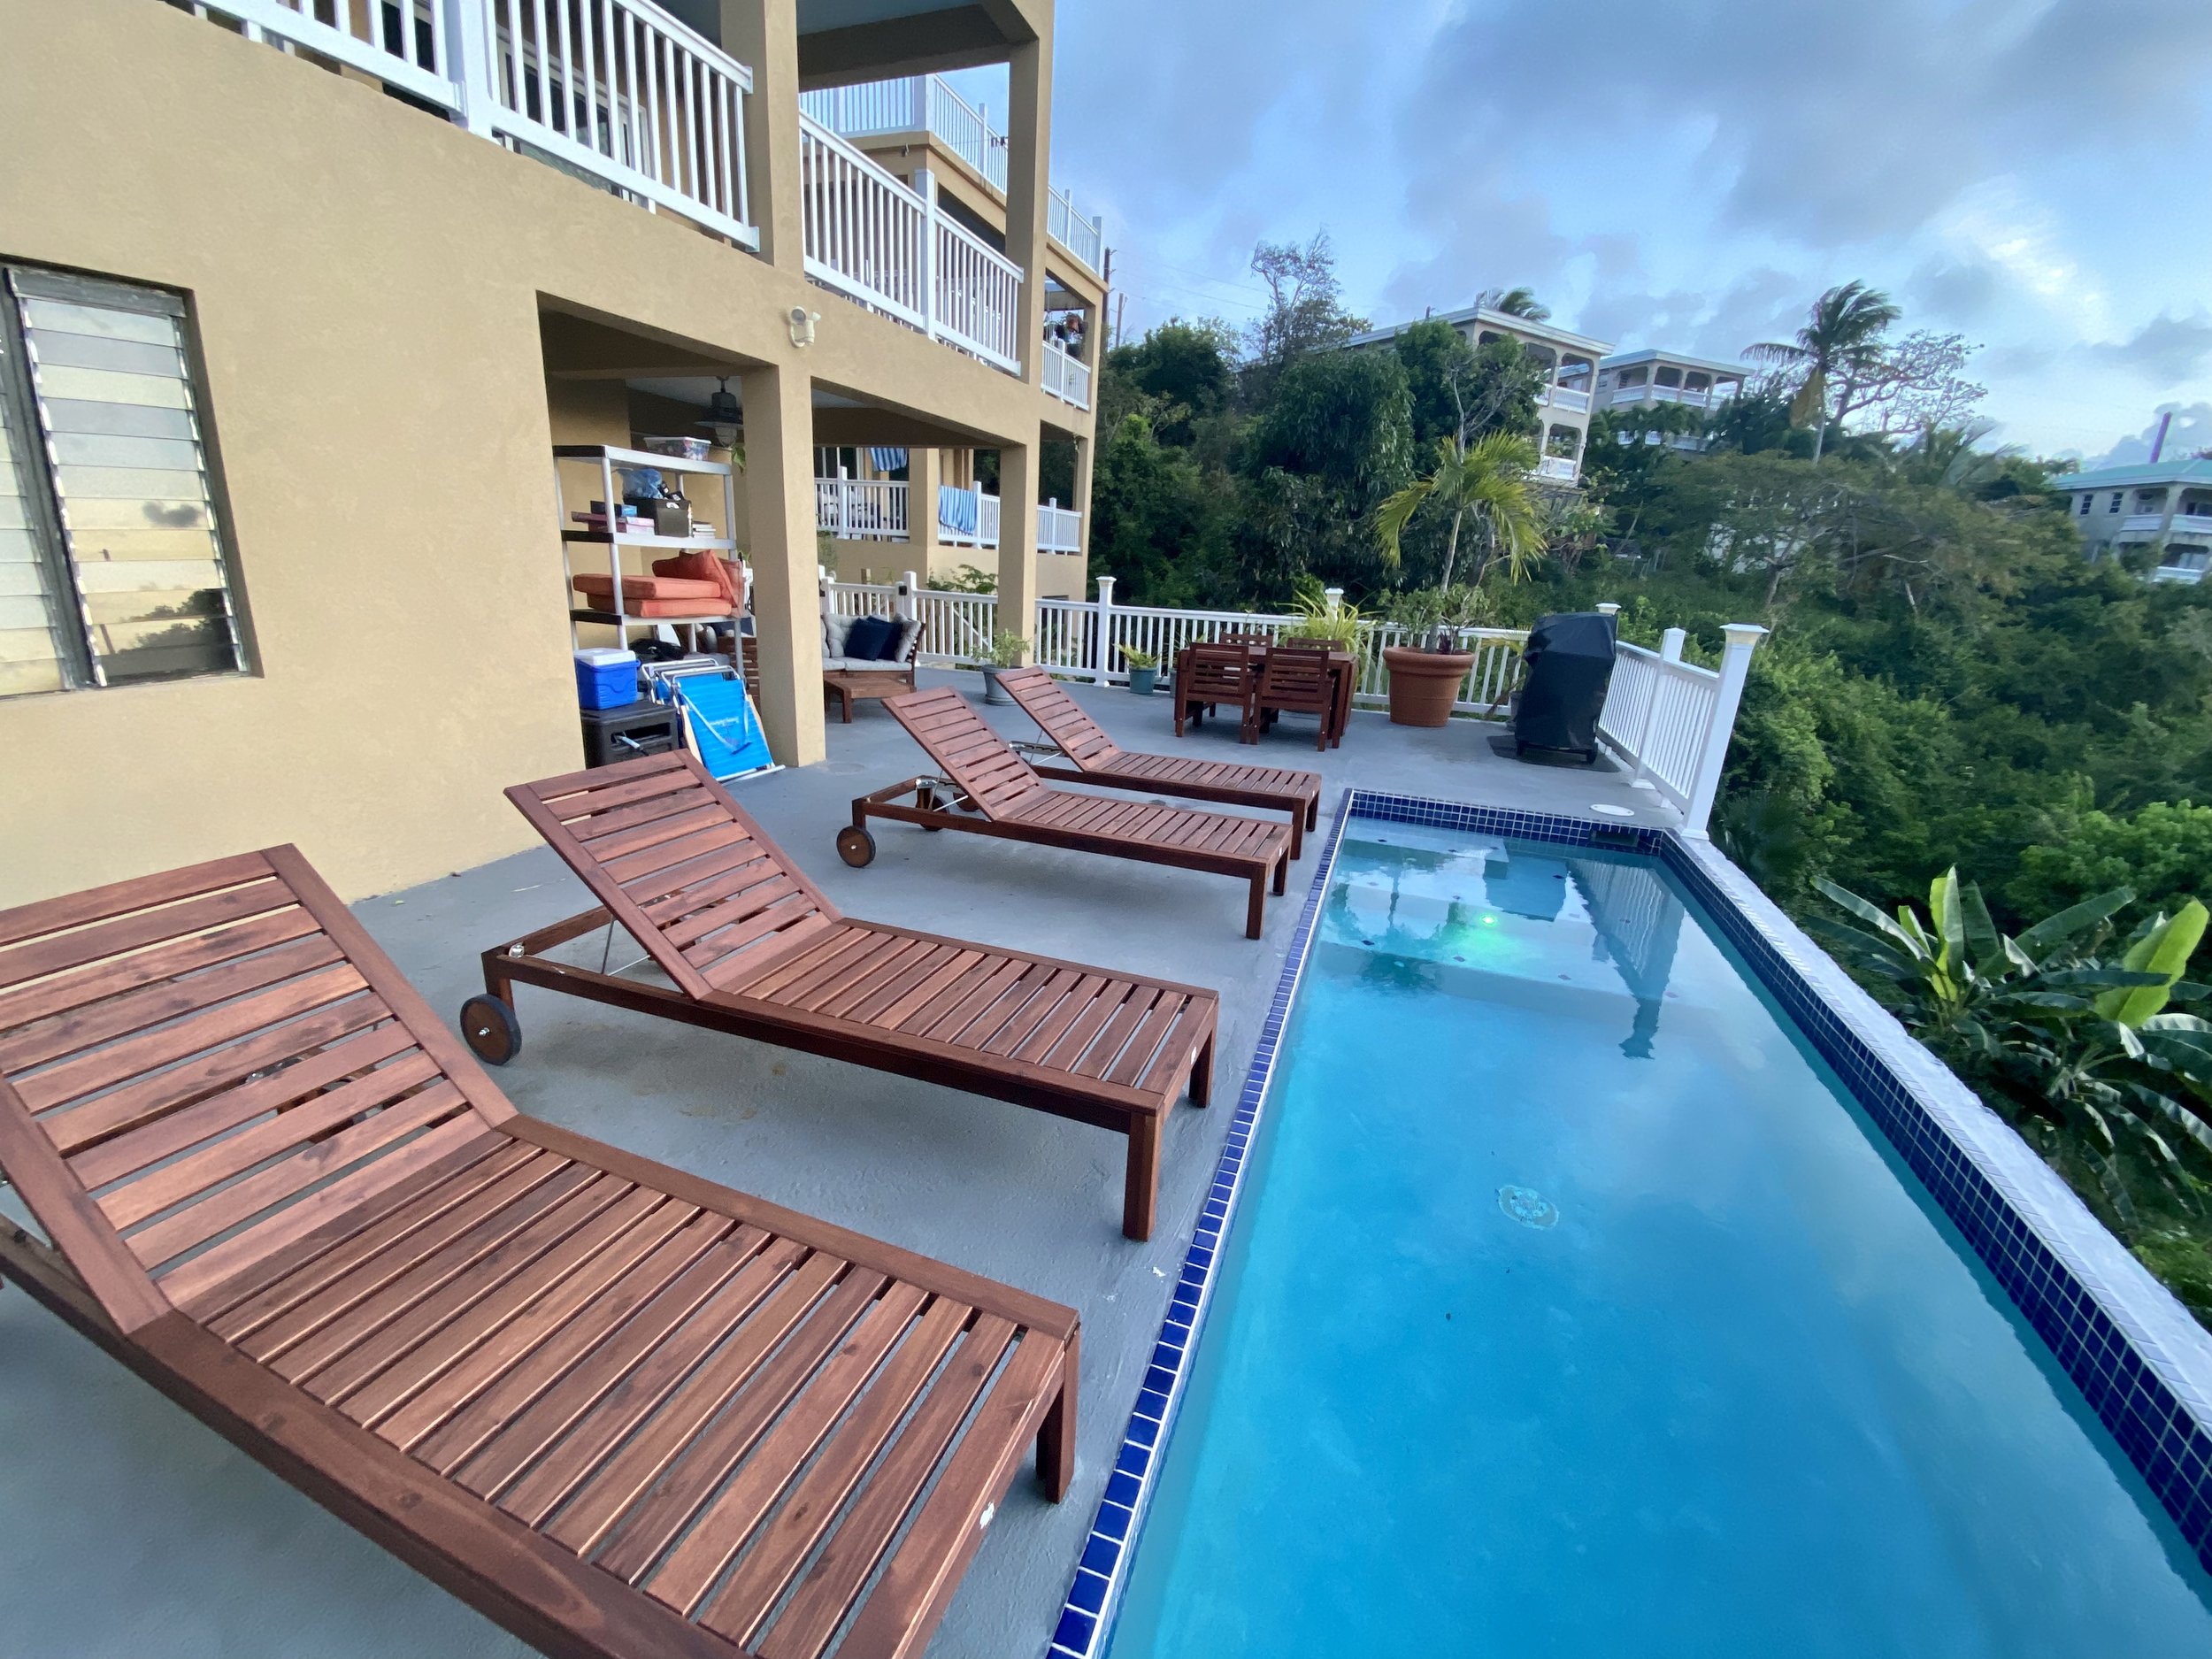 Updated pool deck furniture